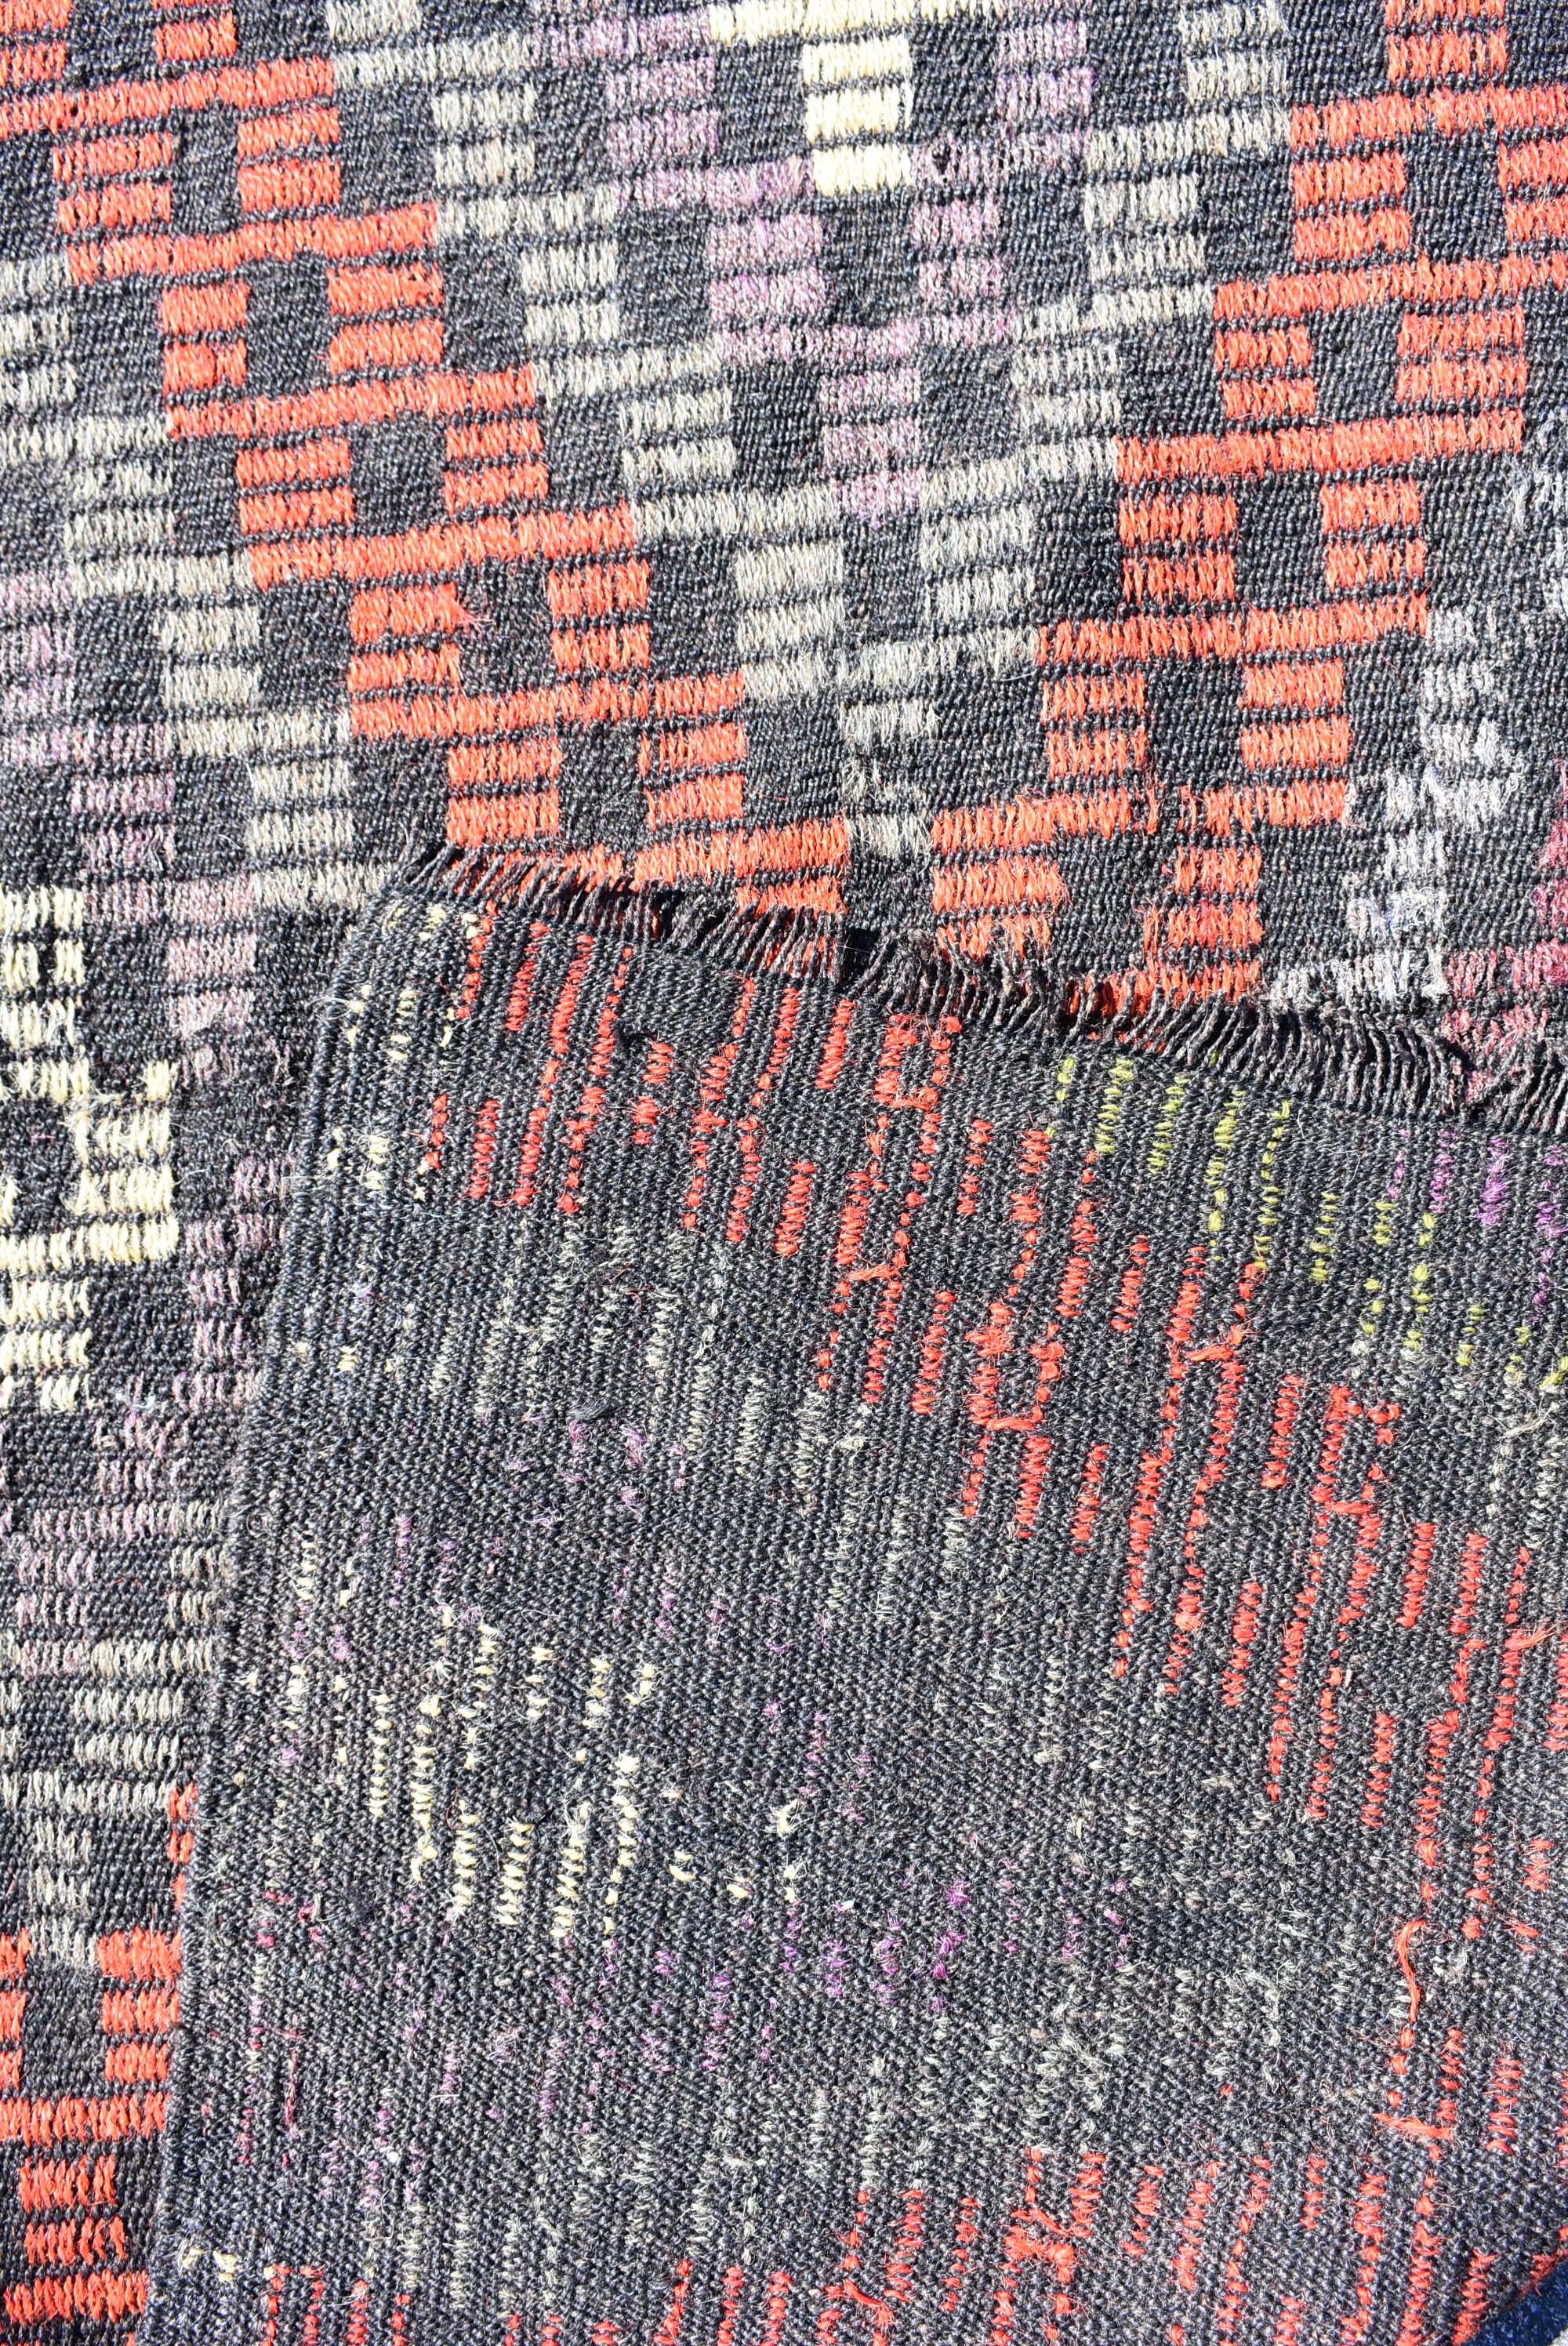 Cecim kilim rug vintage kilim rug 6.3 x 6.6 ft rustic decor | Etsy